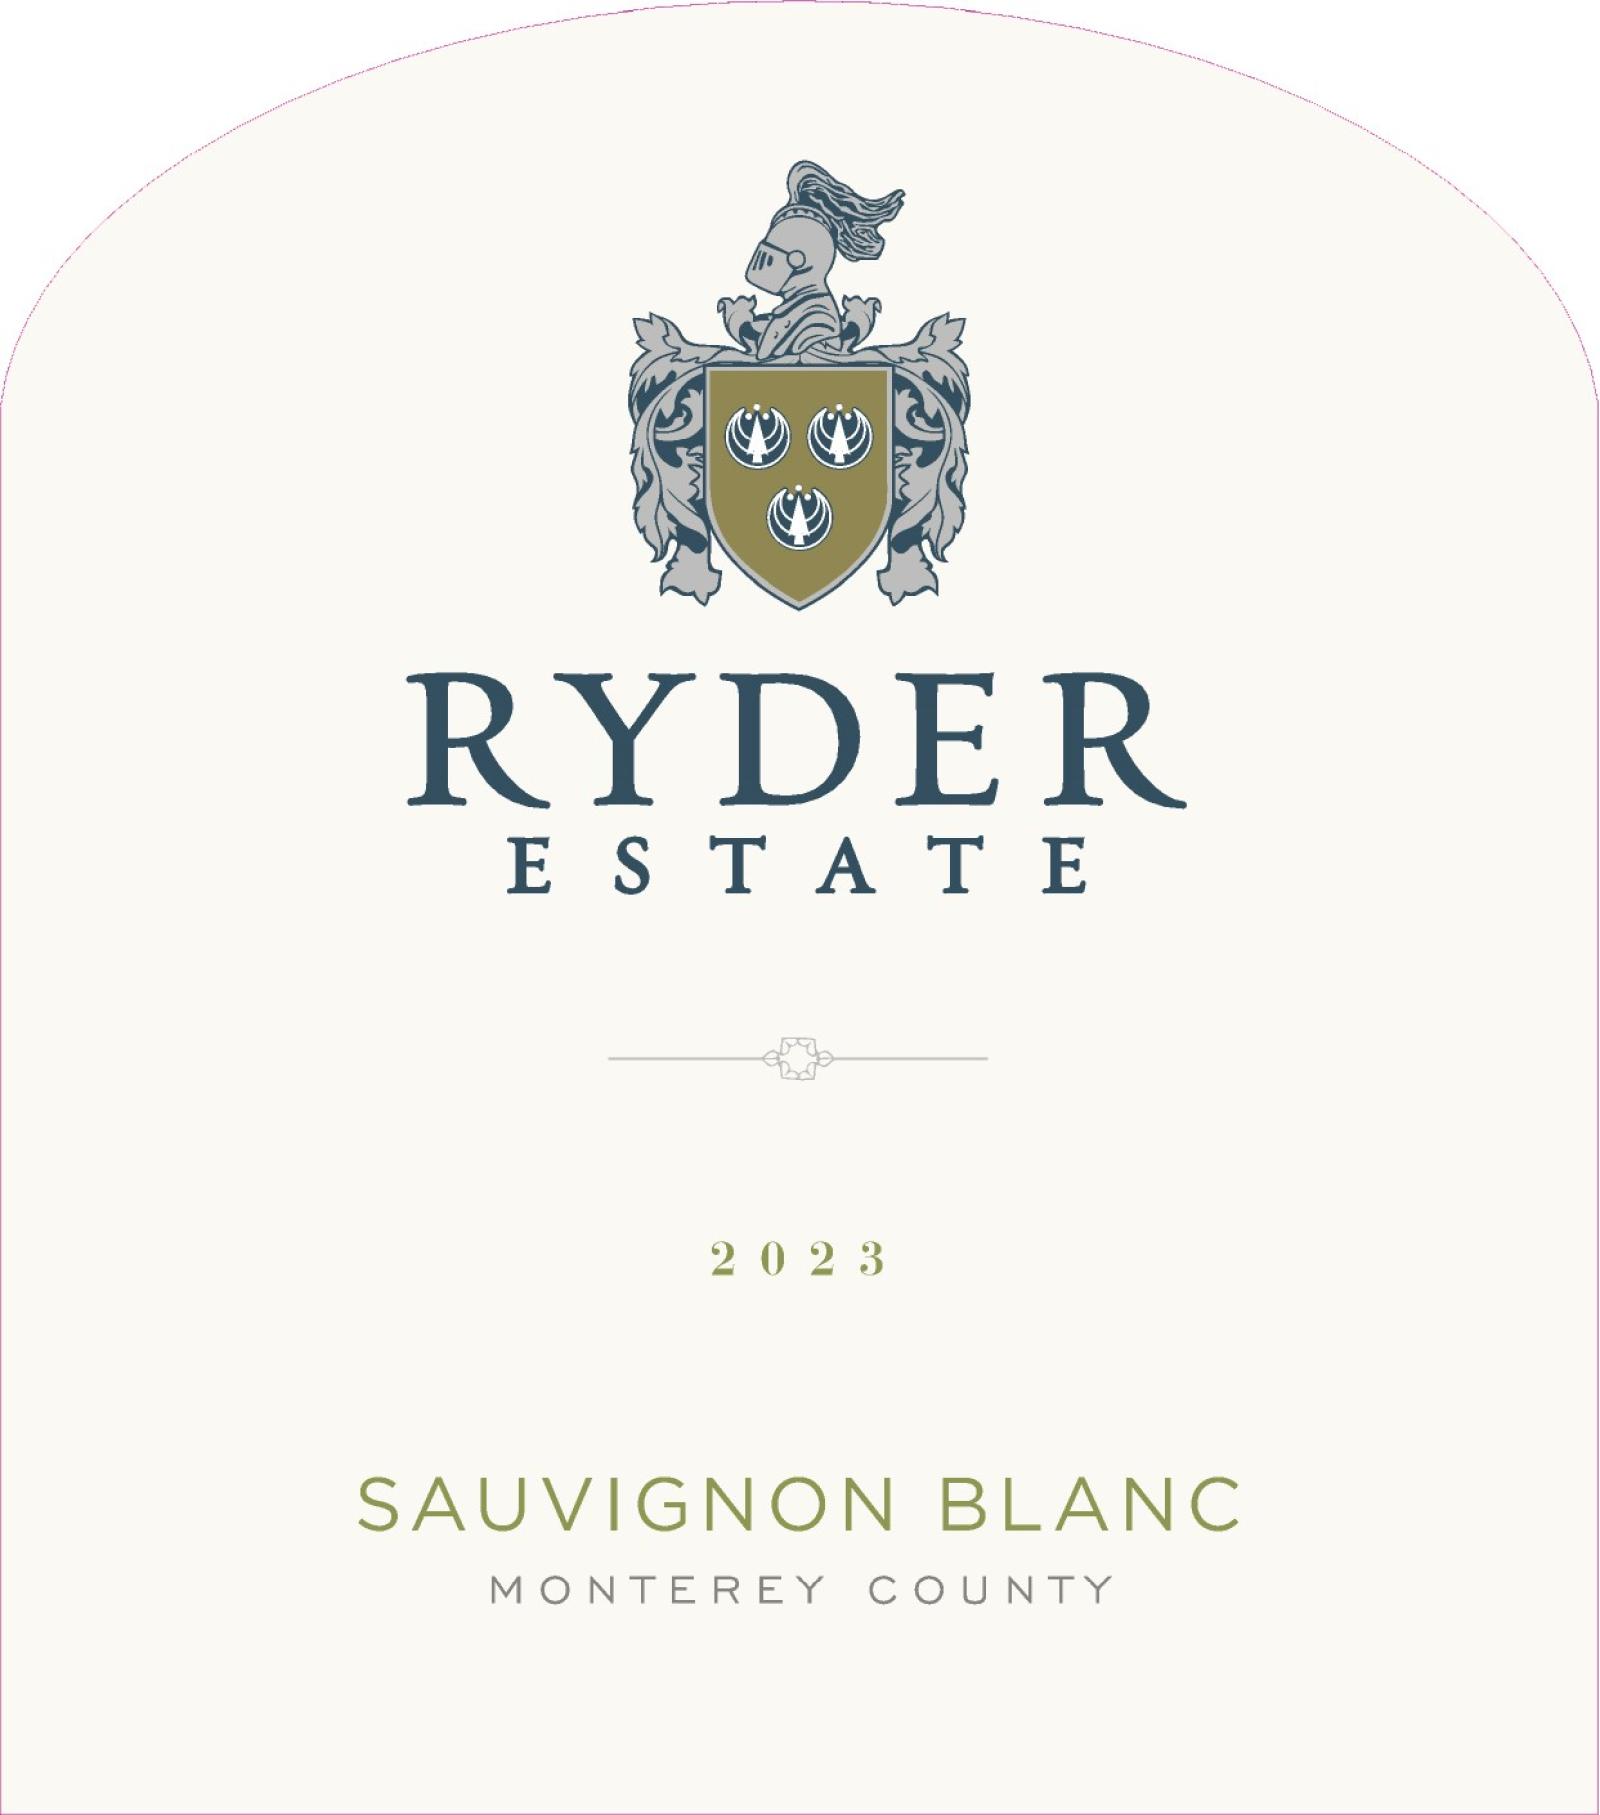 Ryder Estate Sauvignon Blanc 2023 Export Label